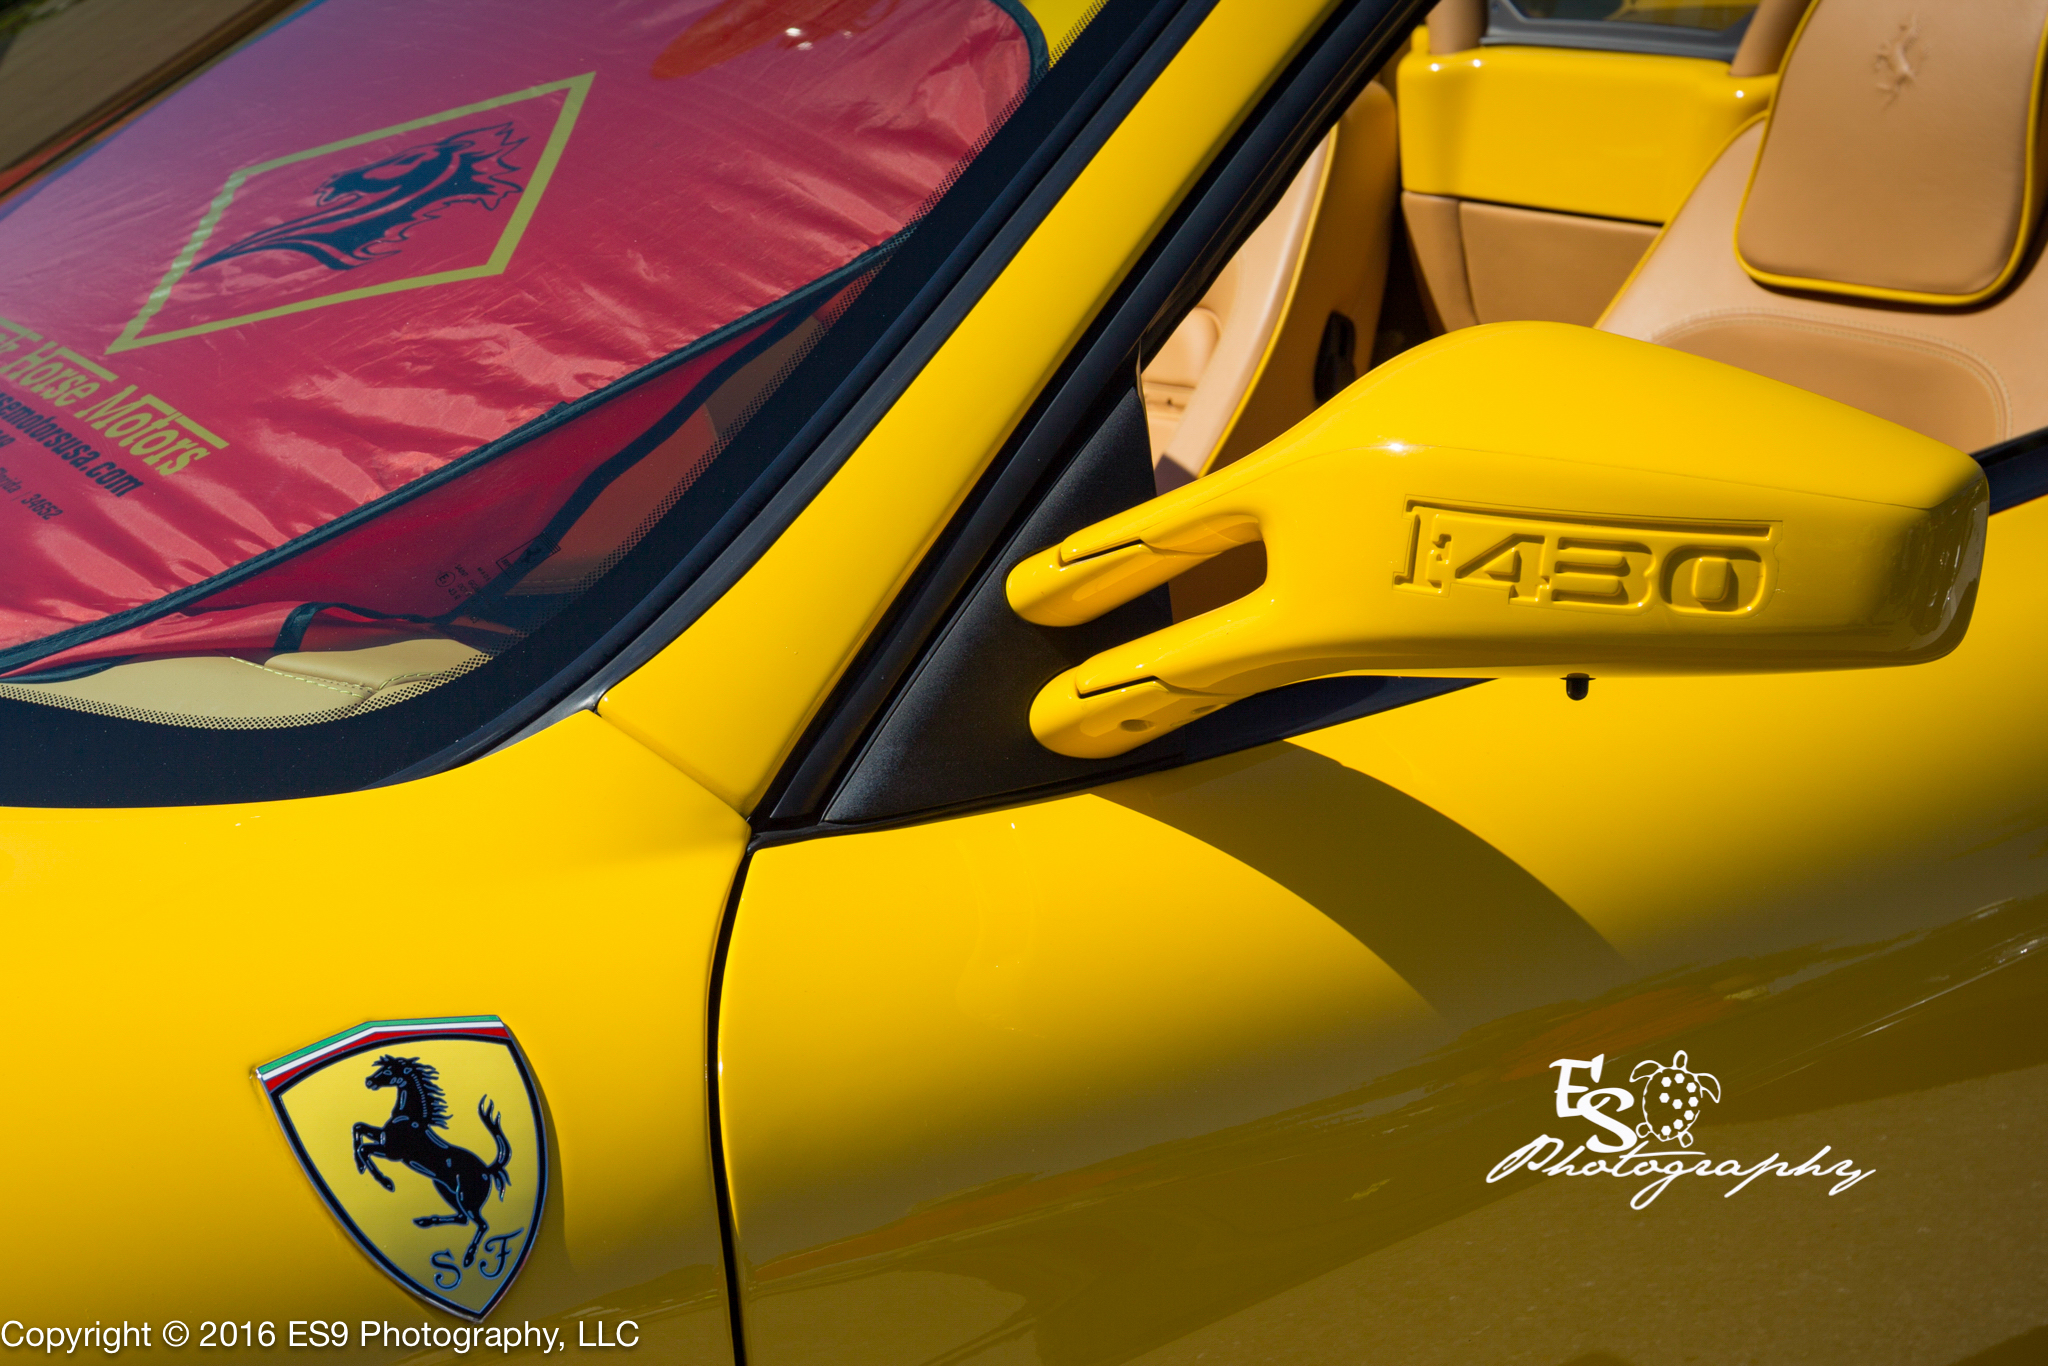 Cars on 5th Ferrari 430 Spider F1@ ES9 Photography 2016 Naples Photographer.jpg